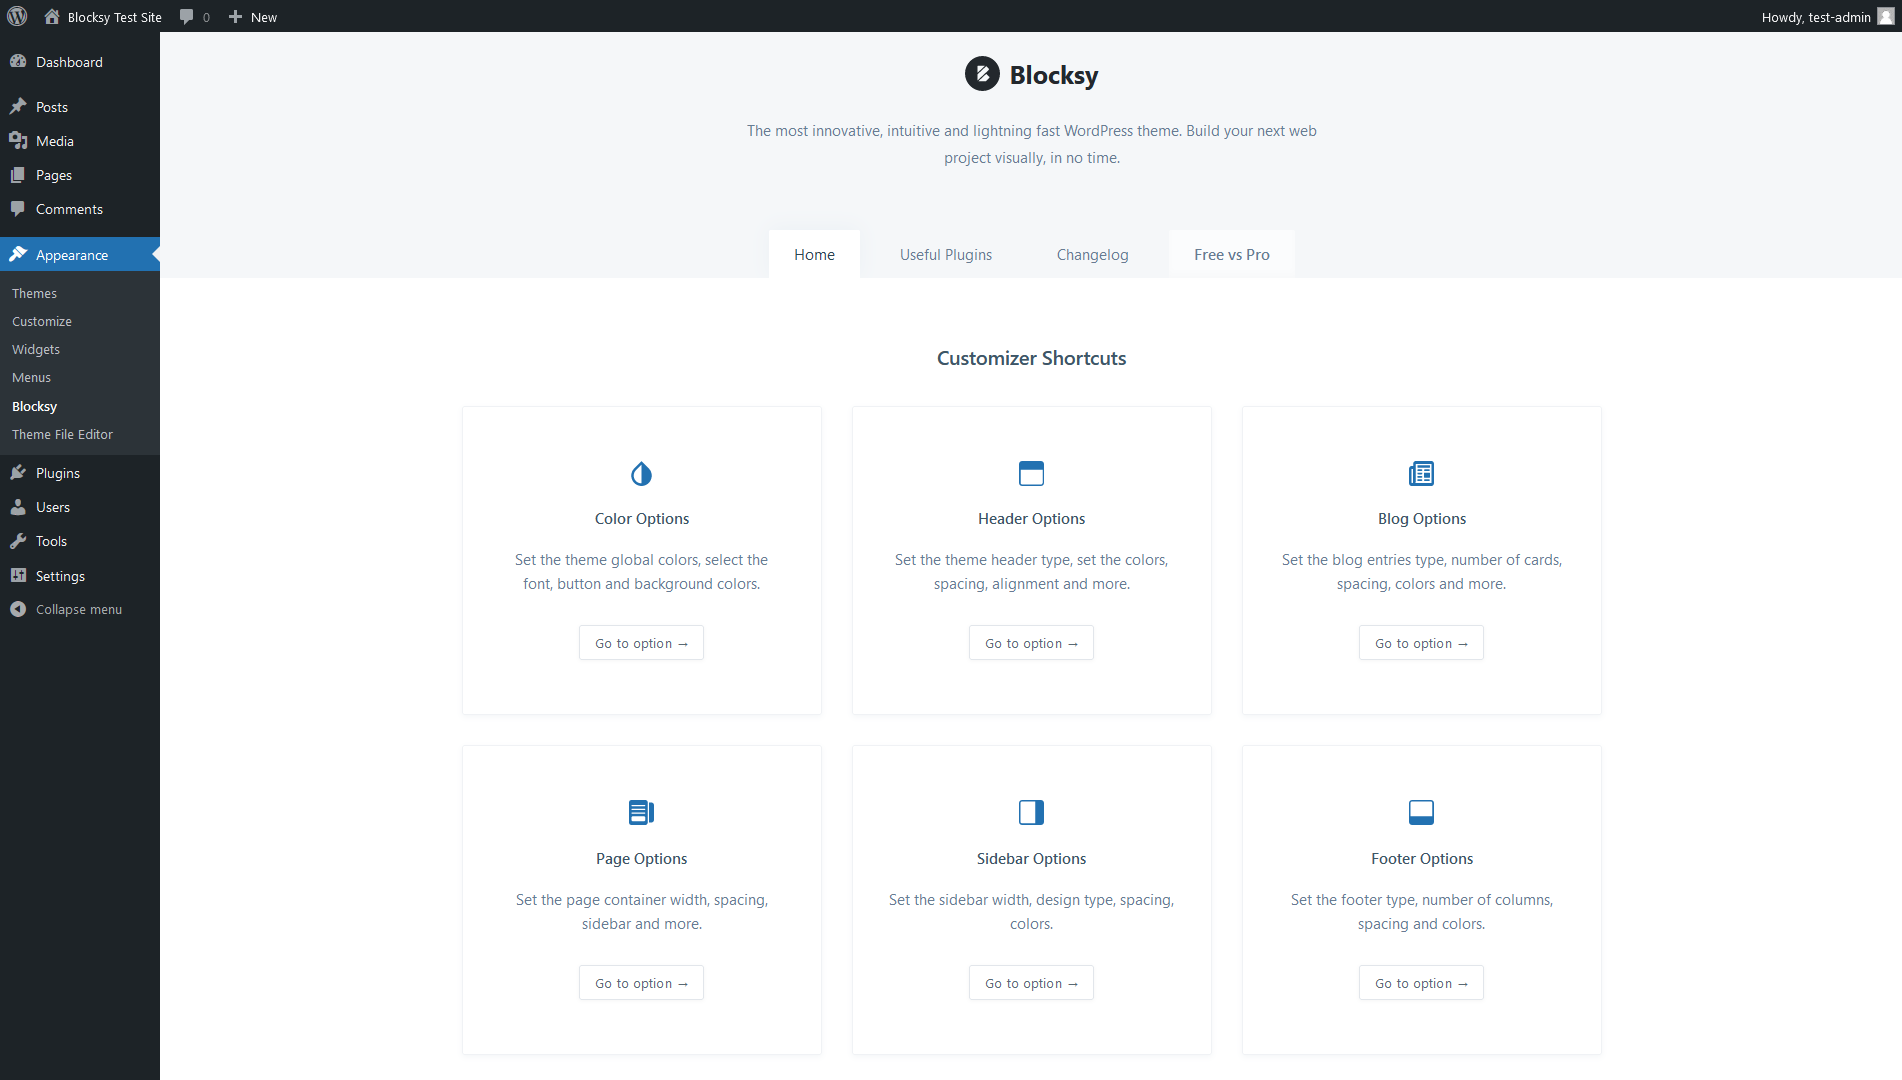 Blocksy's theme dashboard in the WordPress admin area, screenshot 